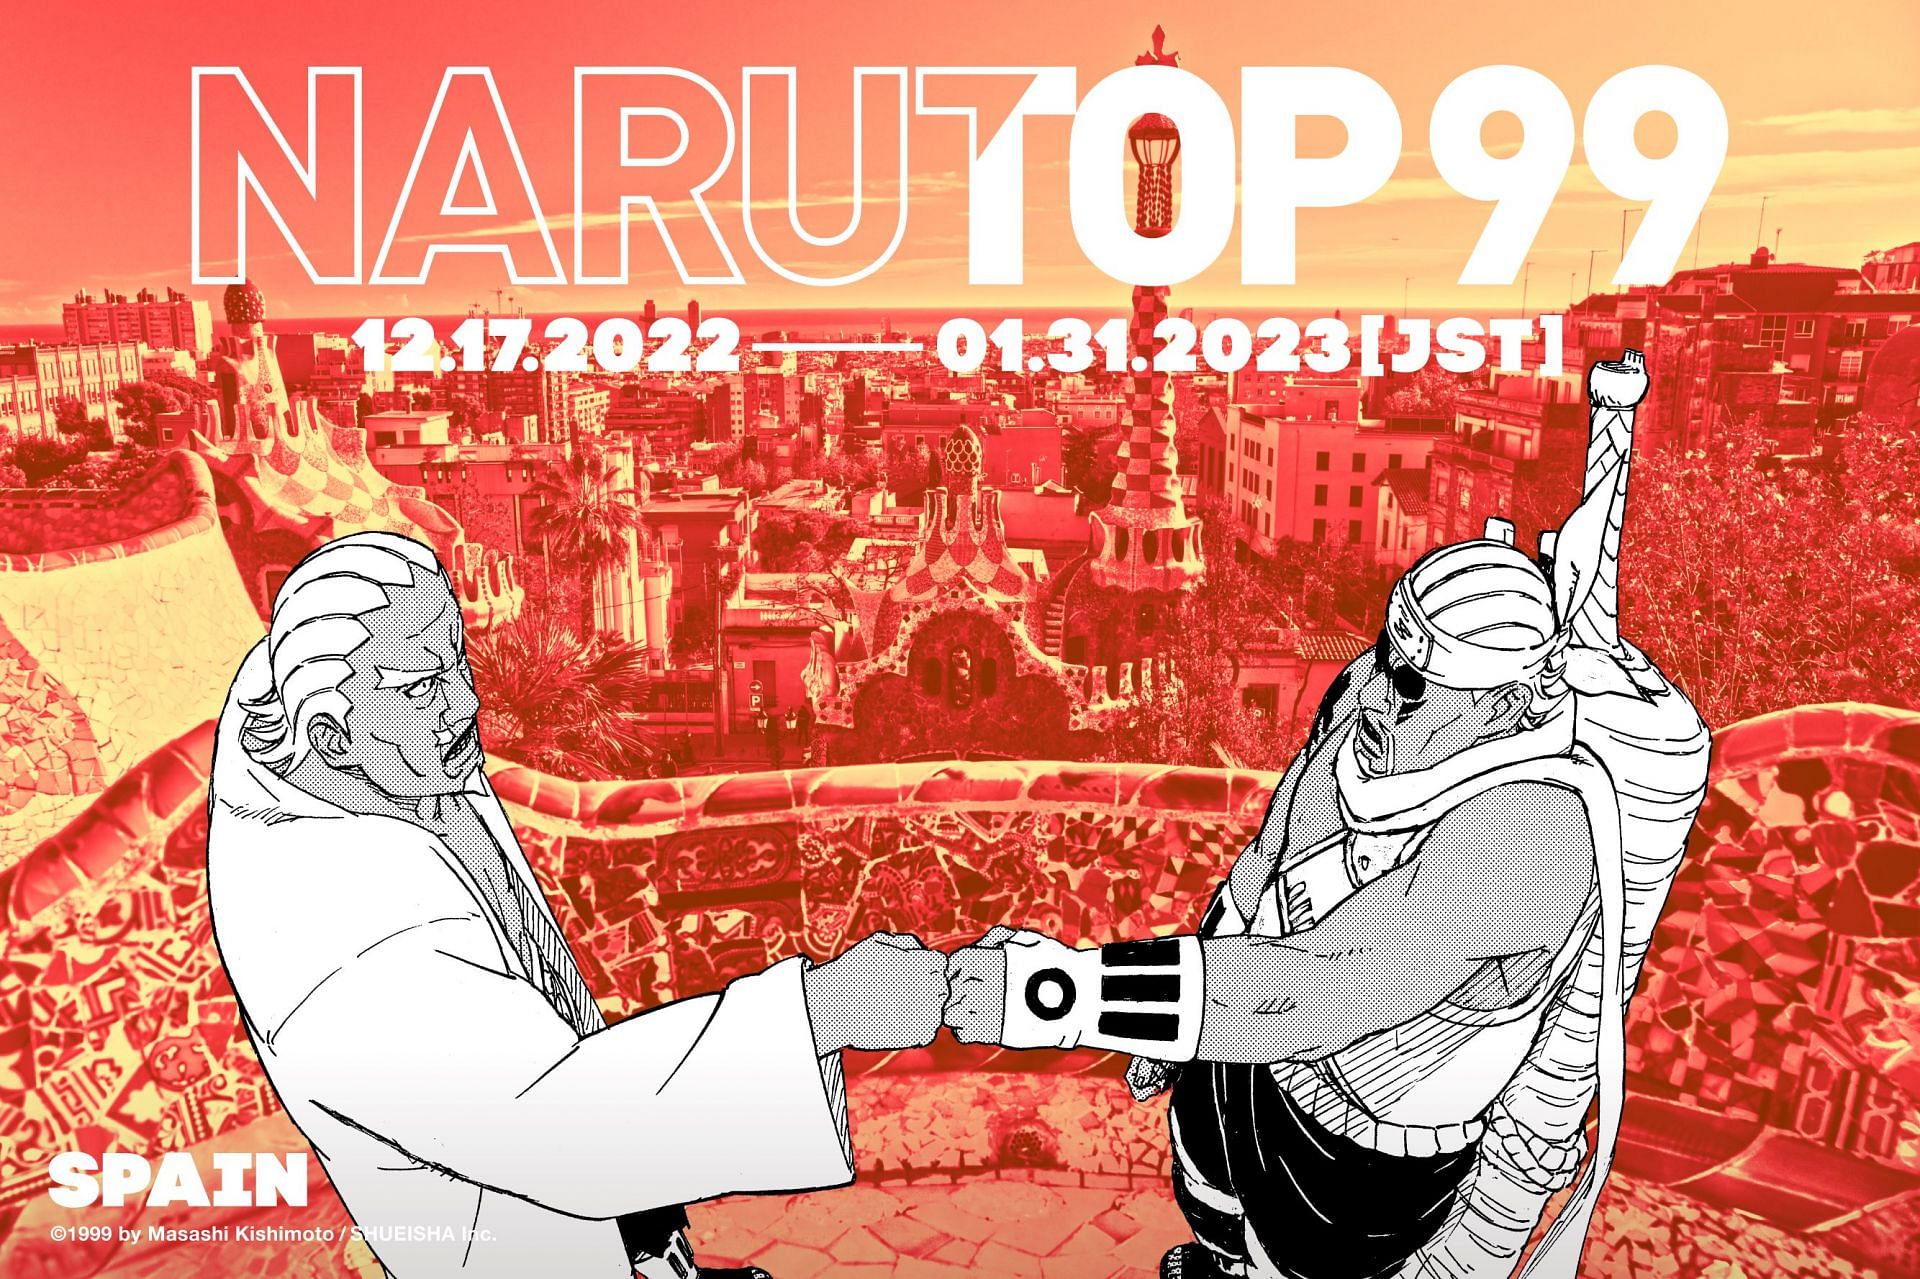 NARUTO TOP 99 Characters Final Results 